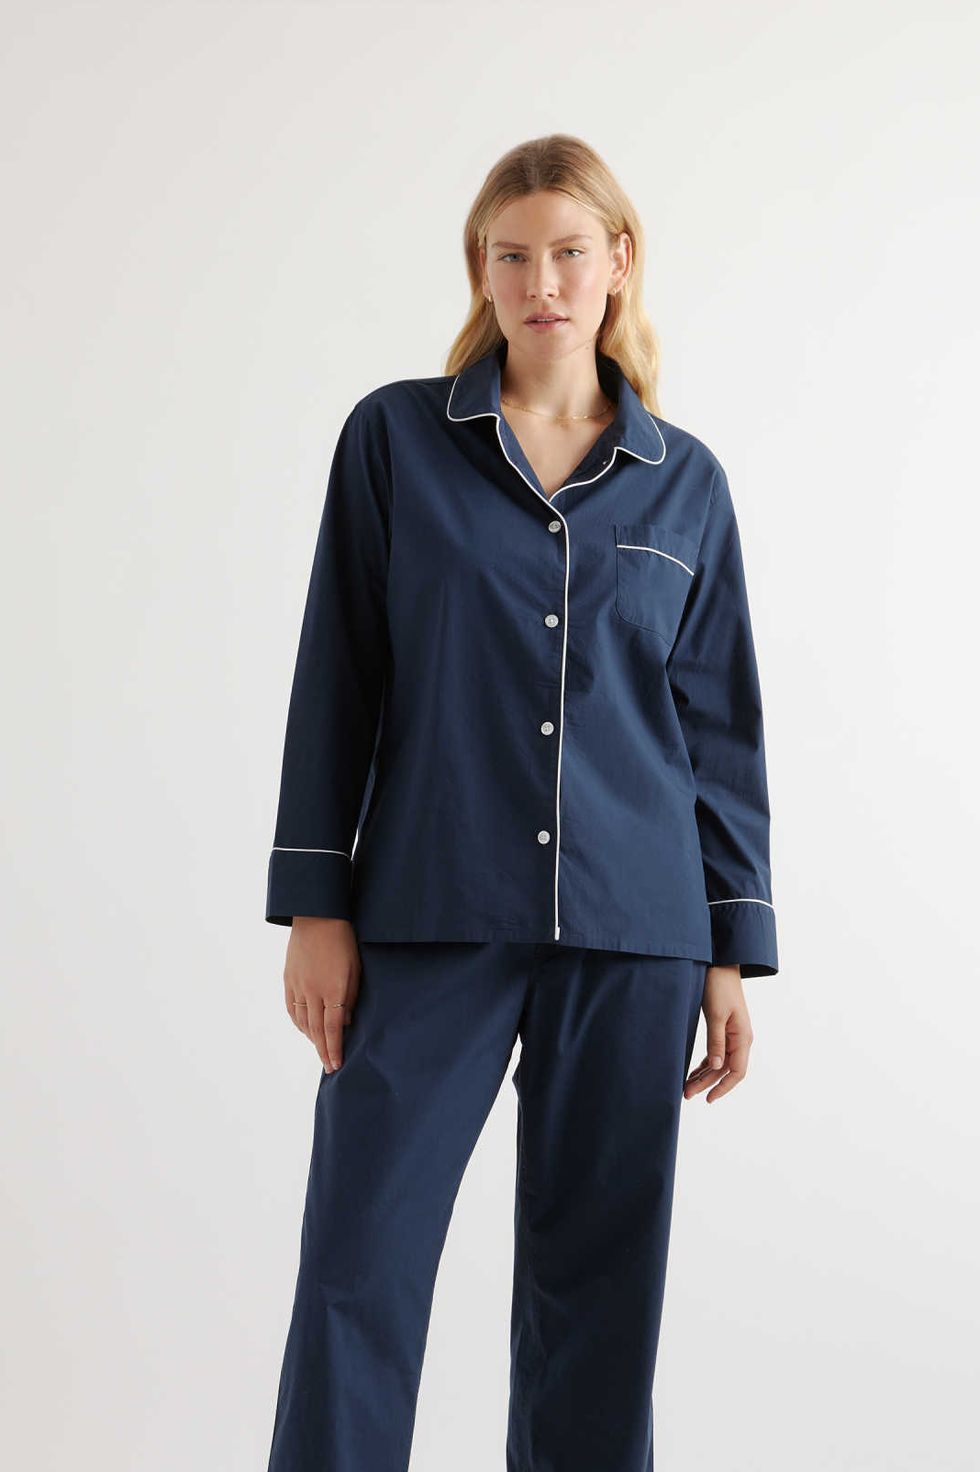 PajamaGram Pajama Set For Women - Pajamas Women Jersey Boyfriend, 100%  Cotton